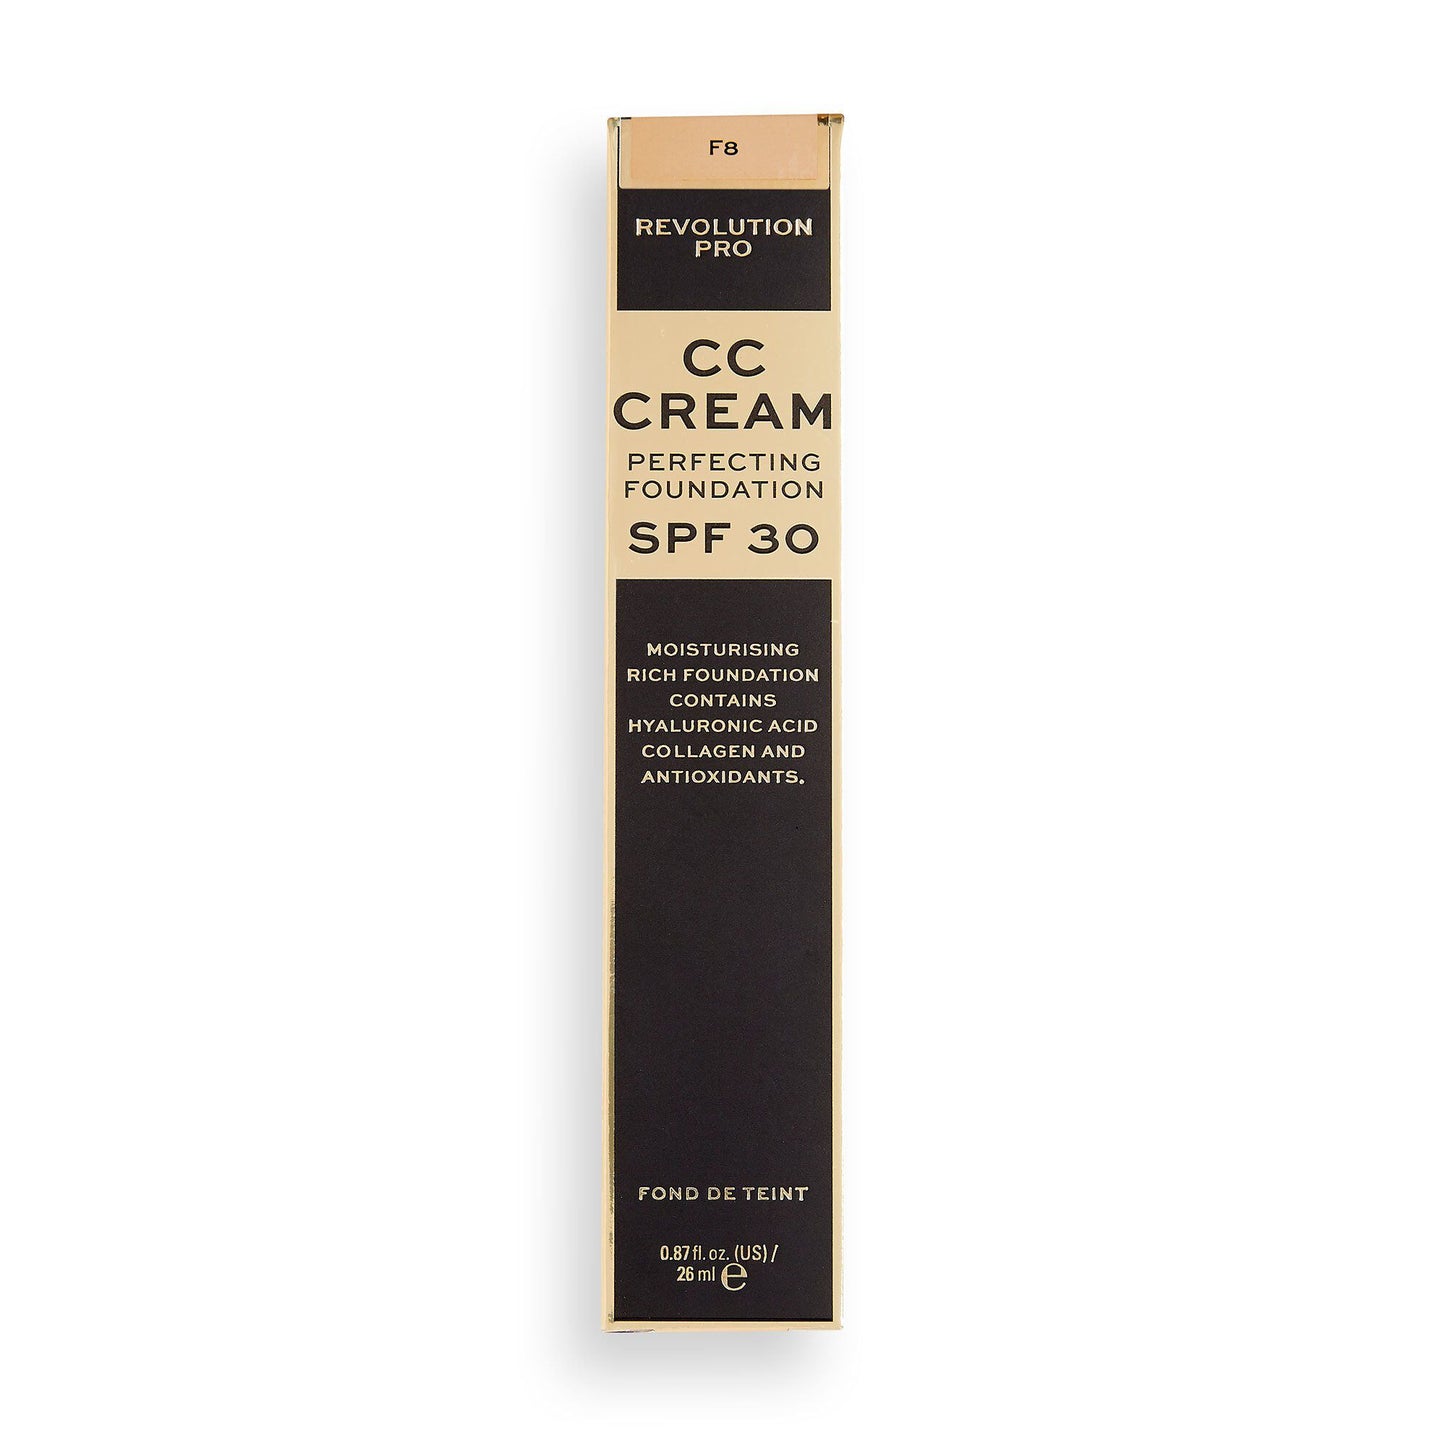 Rev Pro CC Cream Perfecting SPF 30 F8